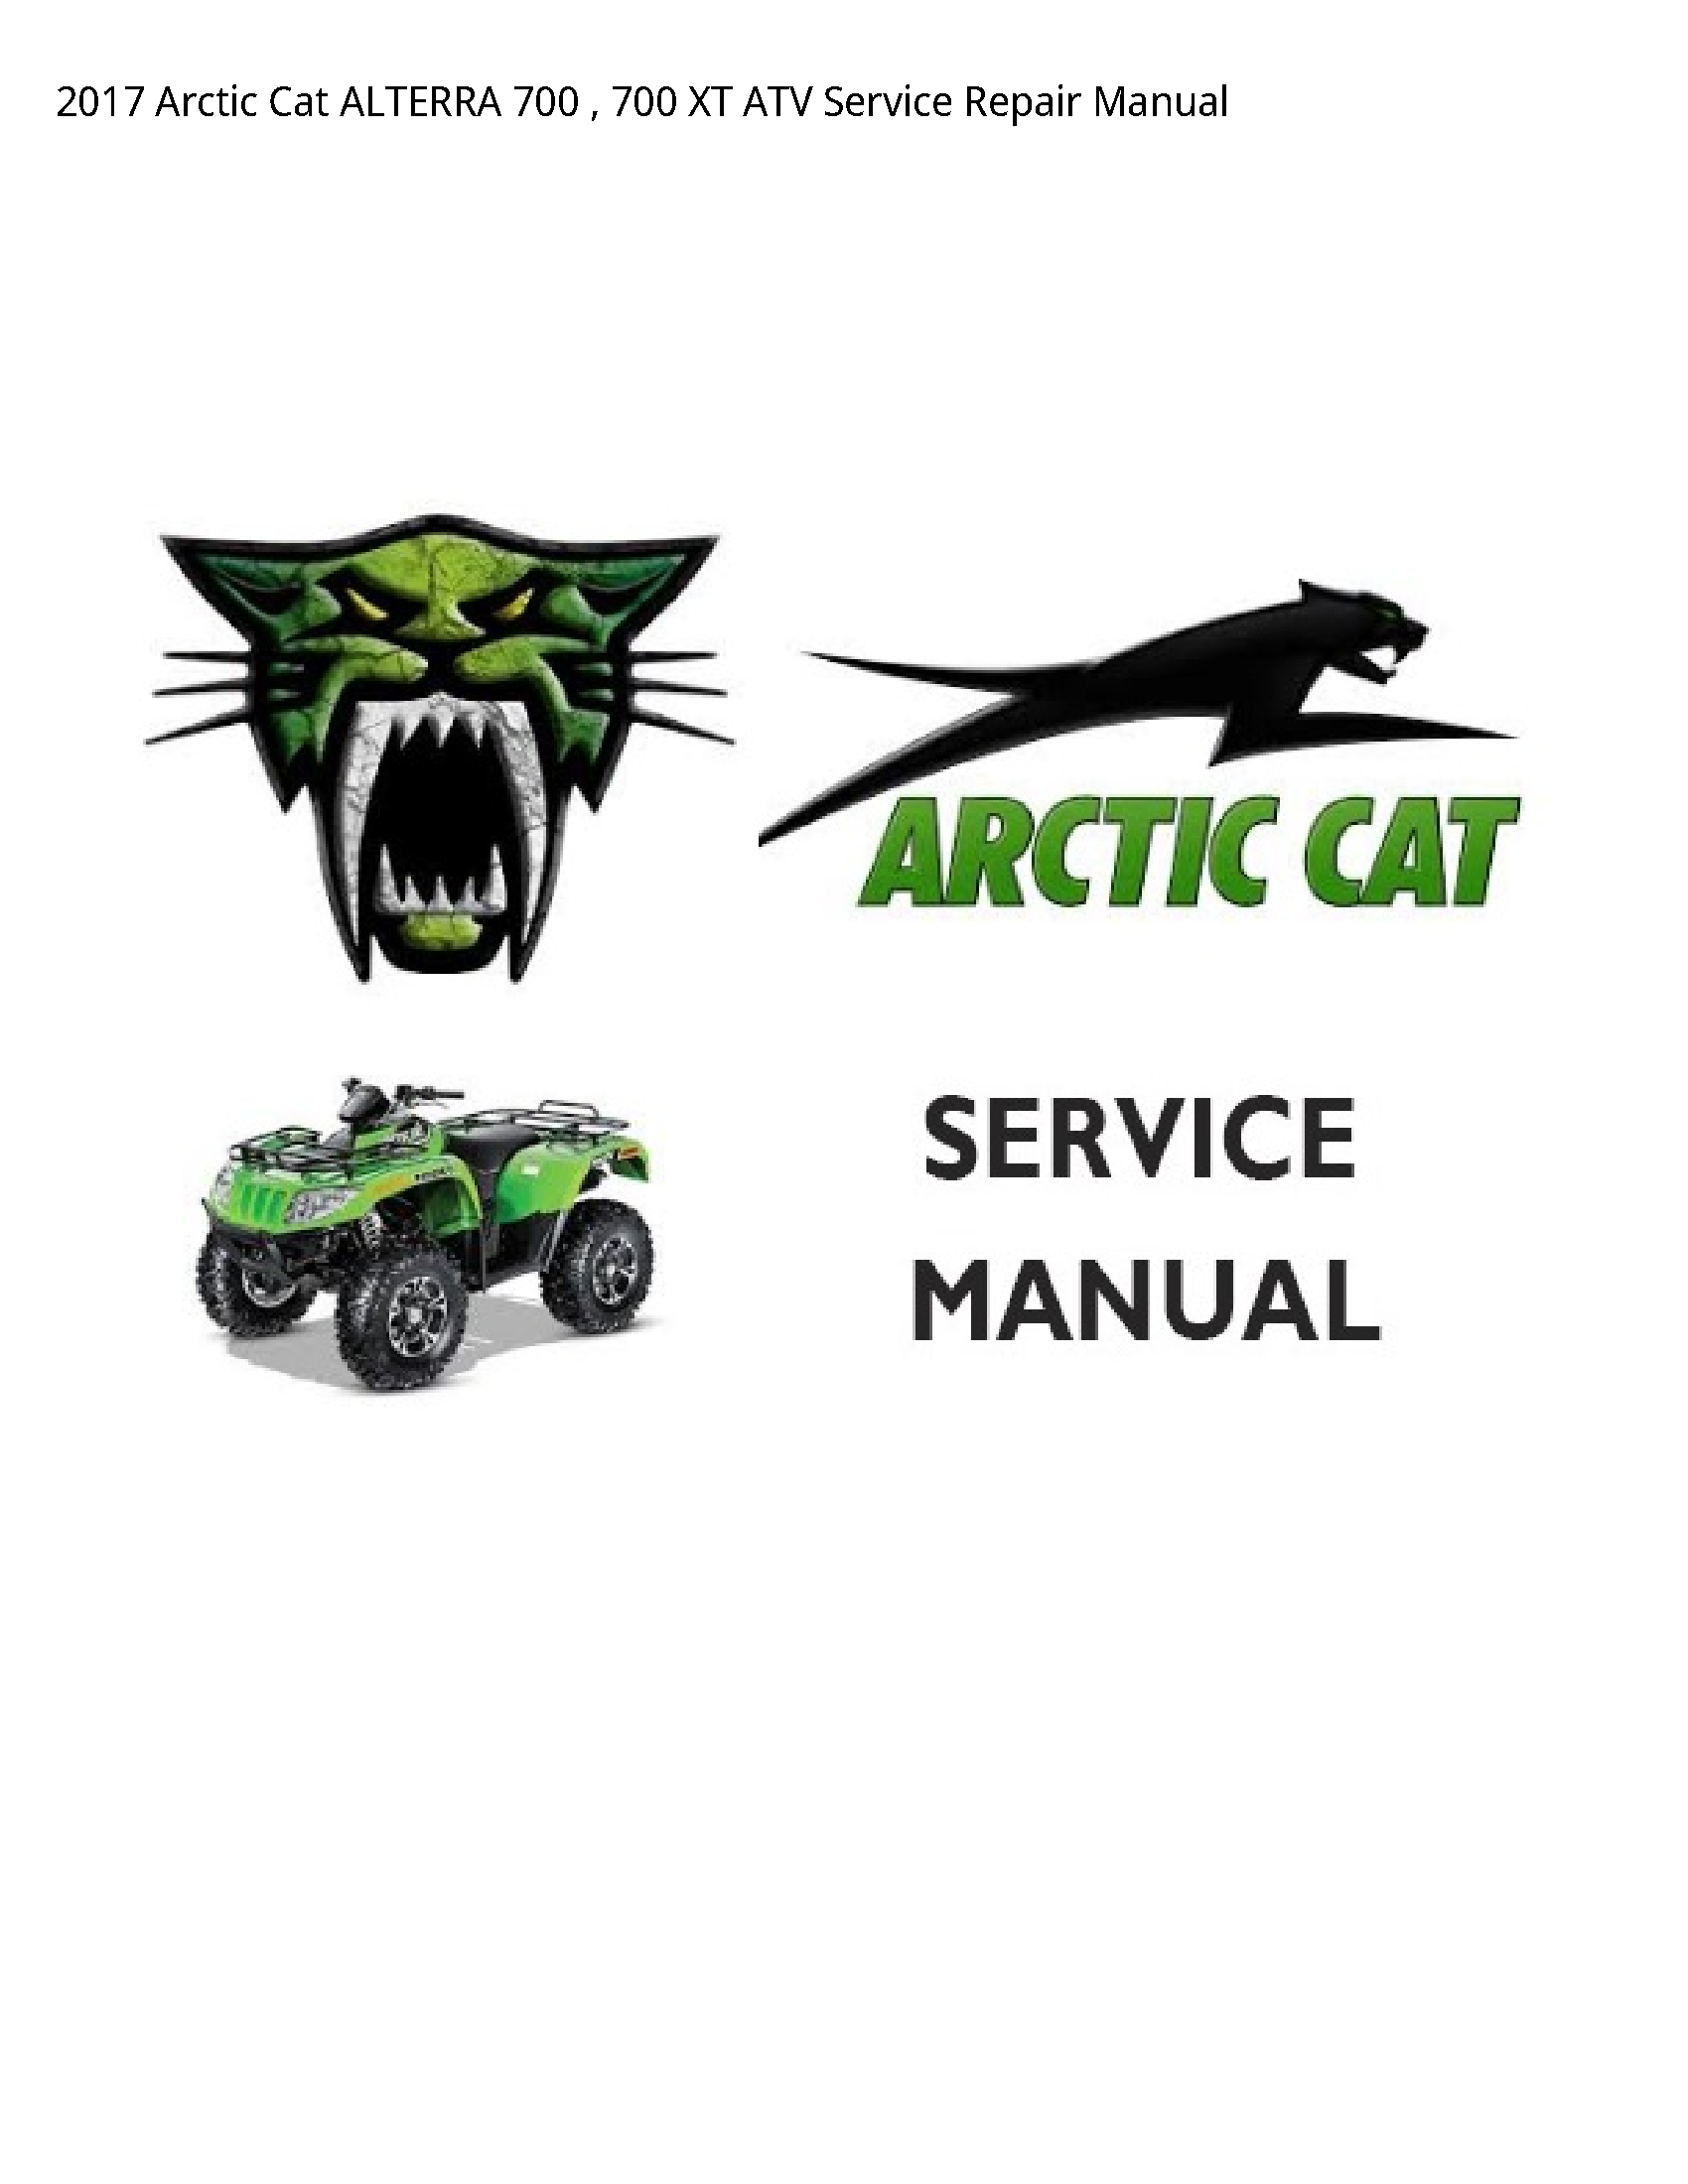 Arctic Cat 700 ALTERRA XT ATV manual